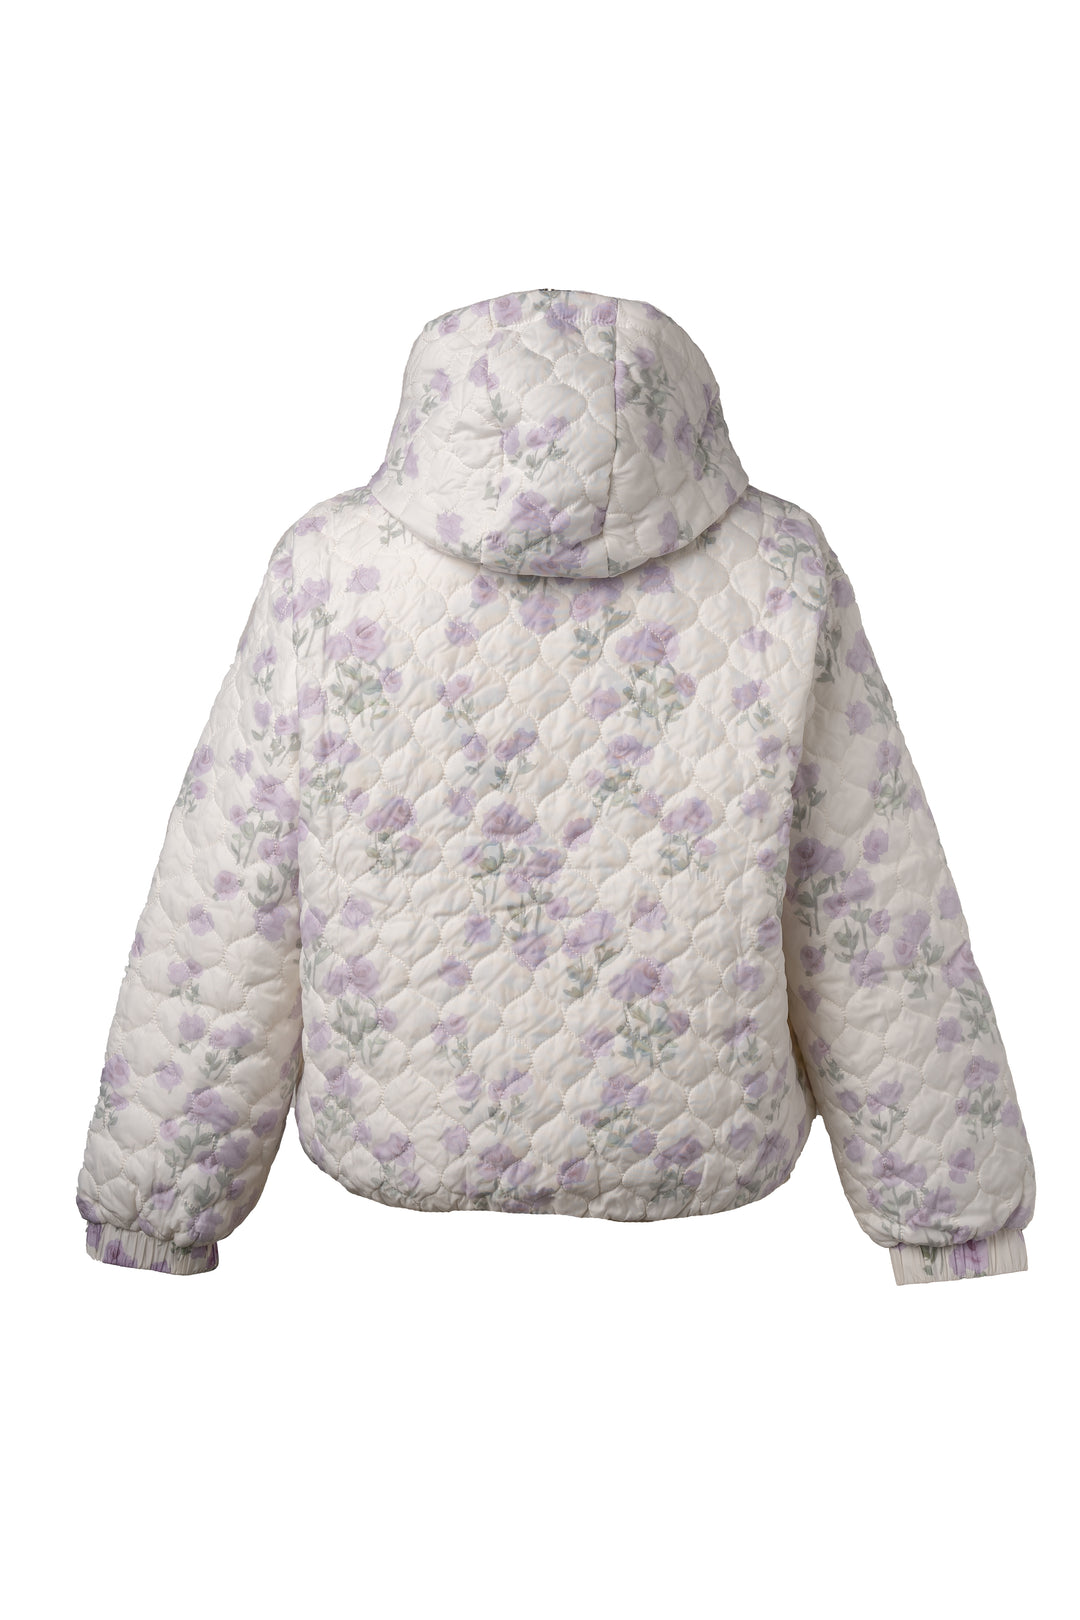 Quilted Jacket in Lavender Floral